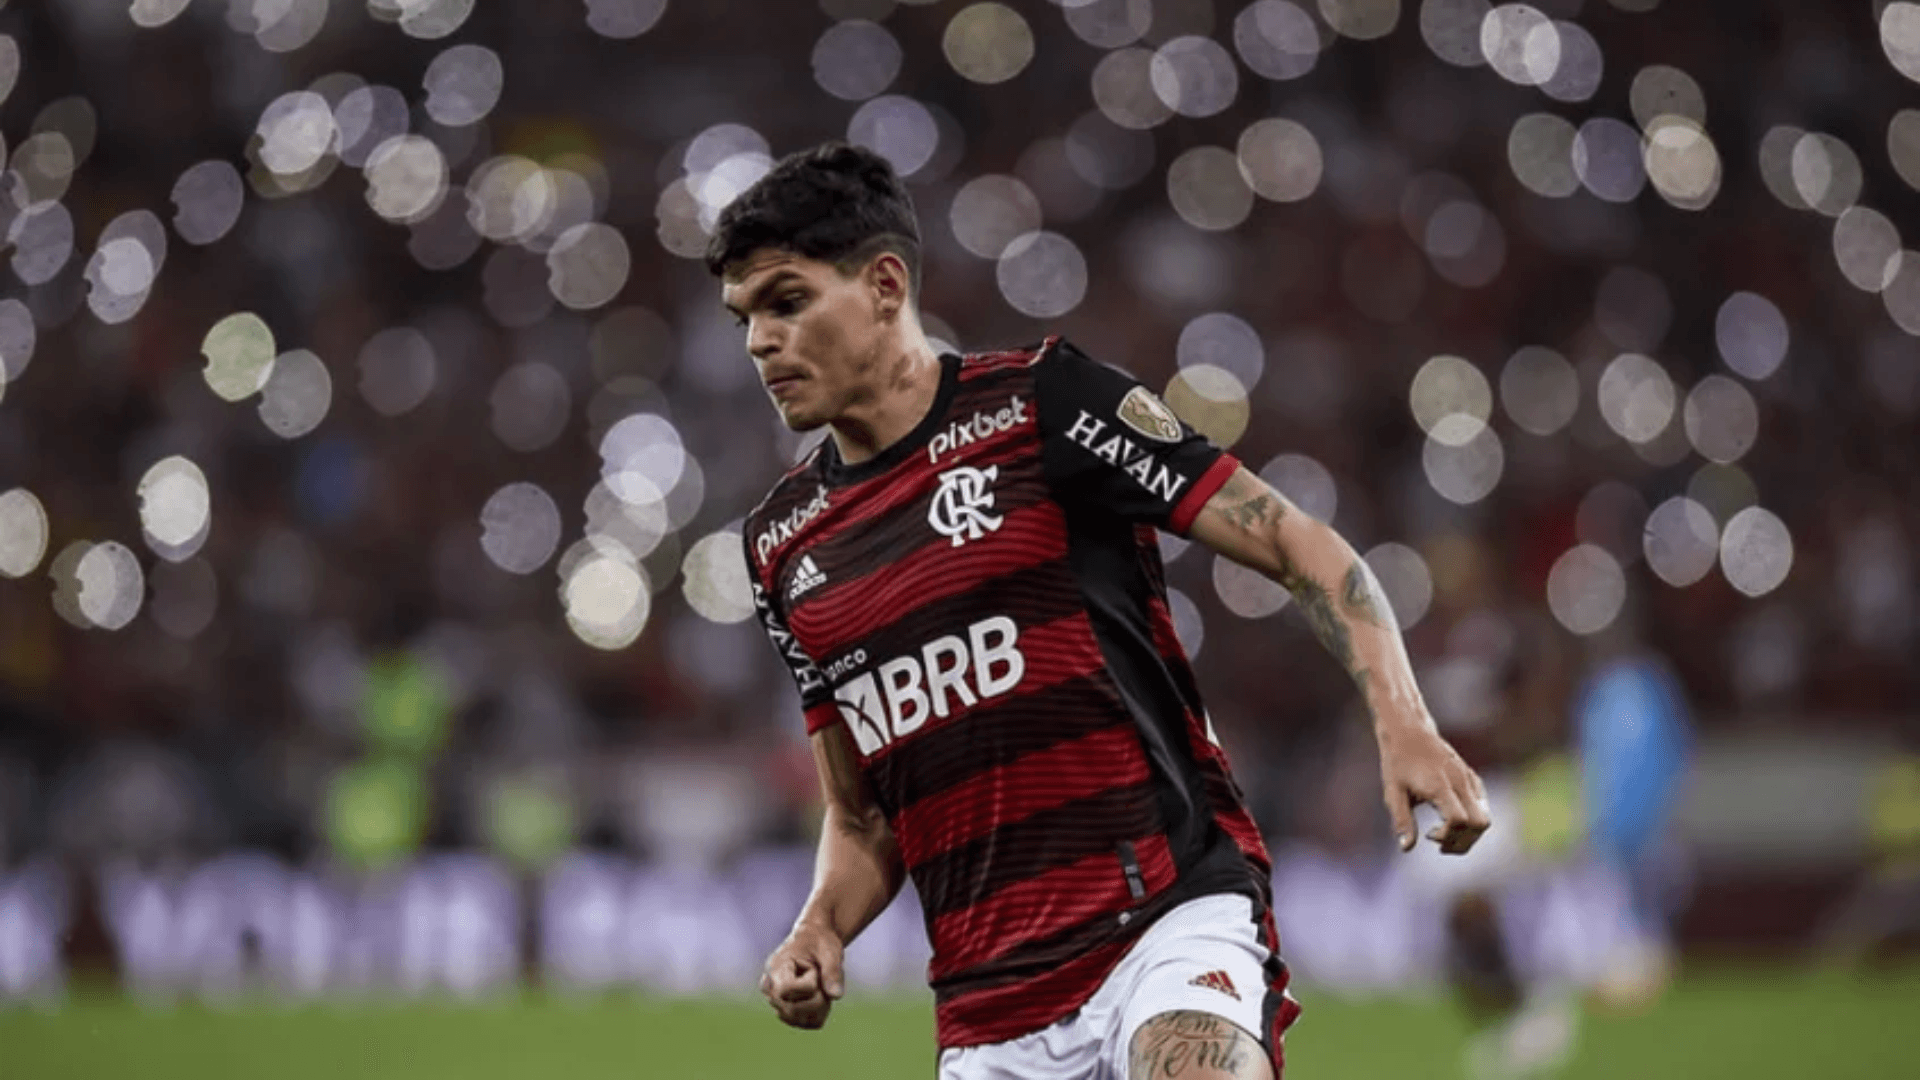 Band transmitirá jogo da final do Campeonato Carioca entre Flamengo e  Fluminense – CidadeMarketing